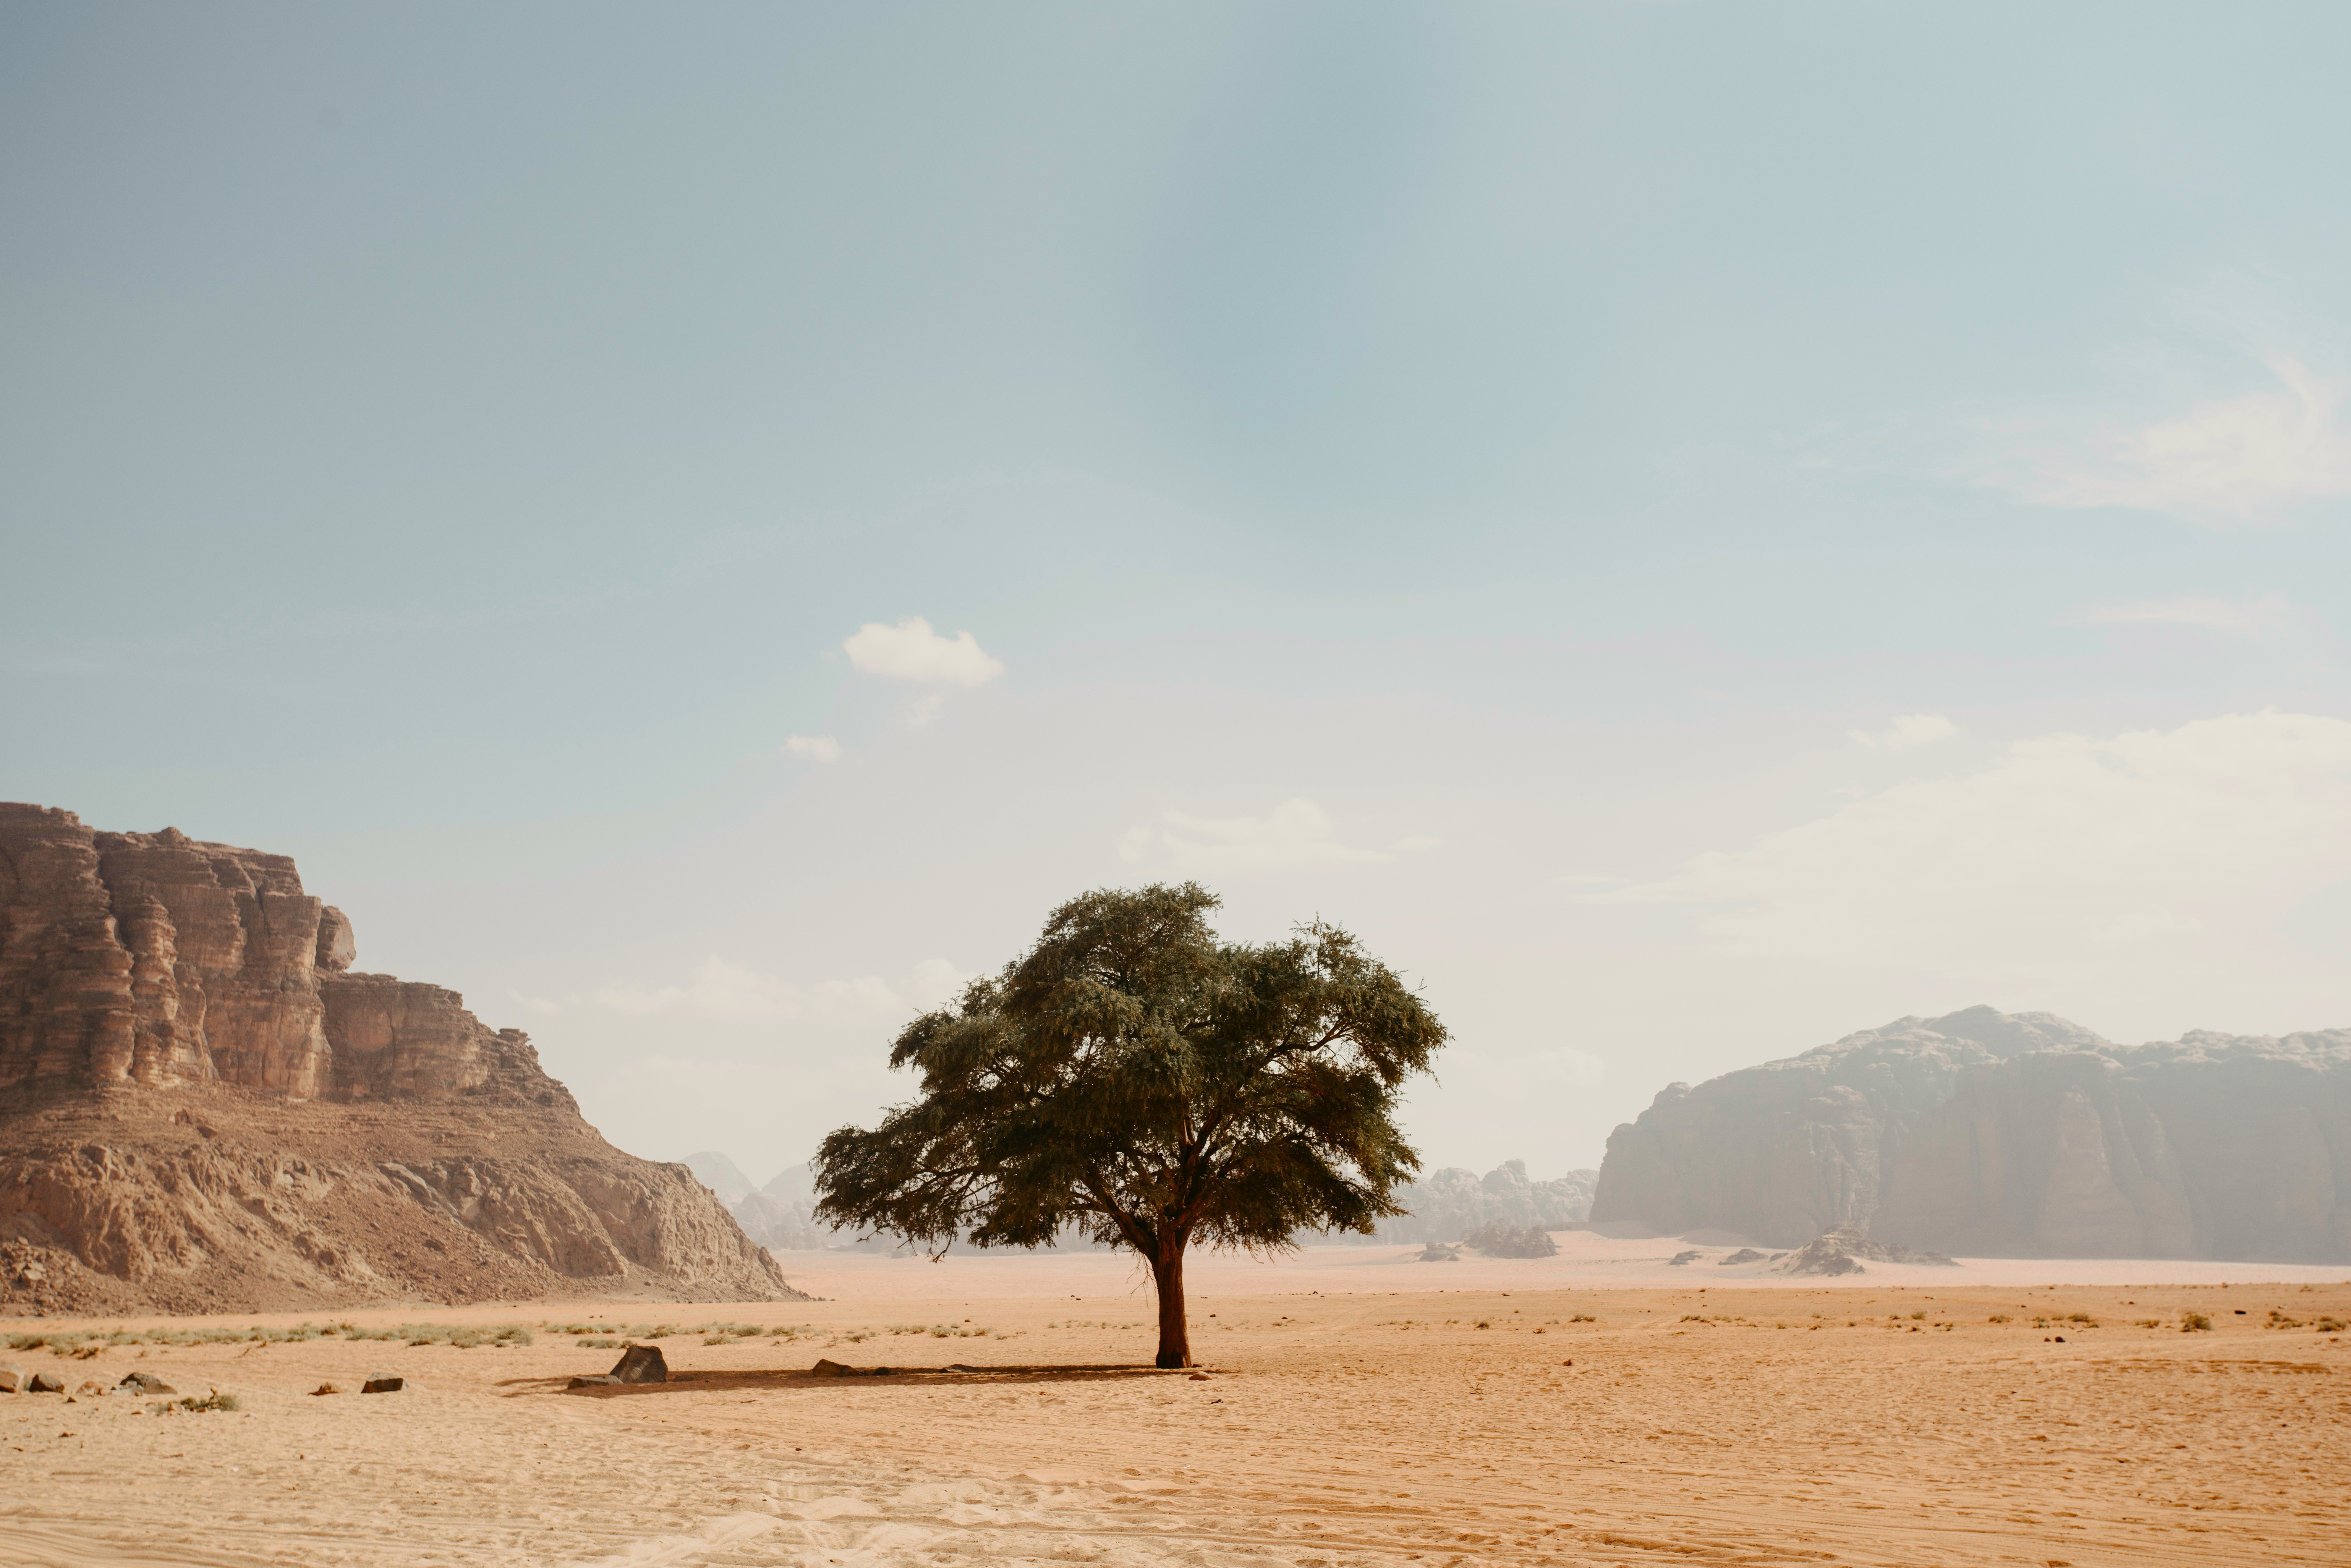 General 7952x5304 nature landscape sky clouds desert sand trees rocks mountains Wadi Rum Jordan (country)